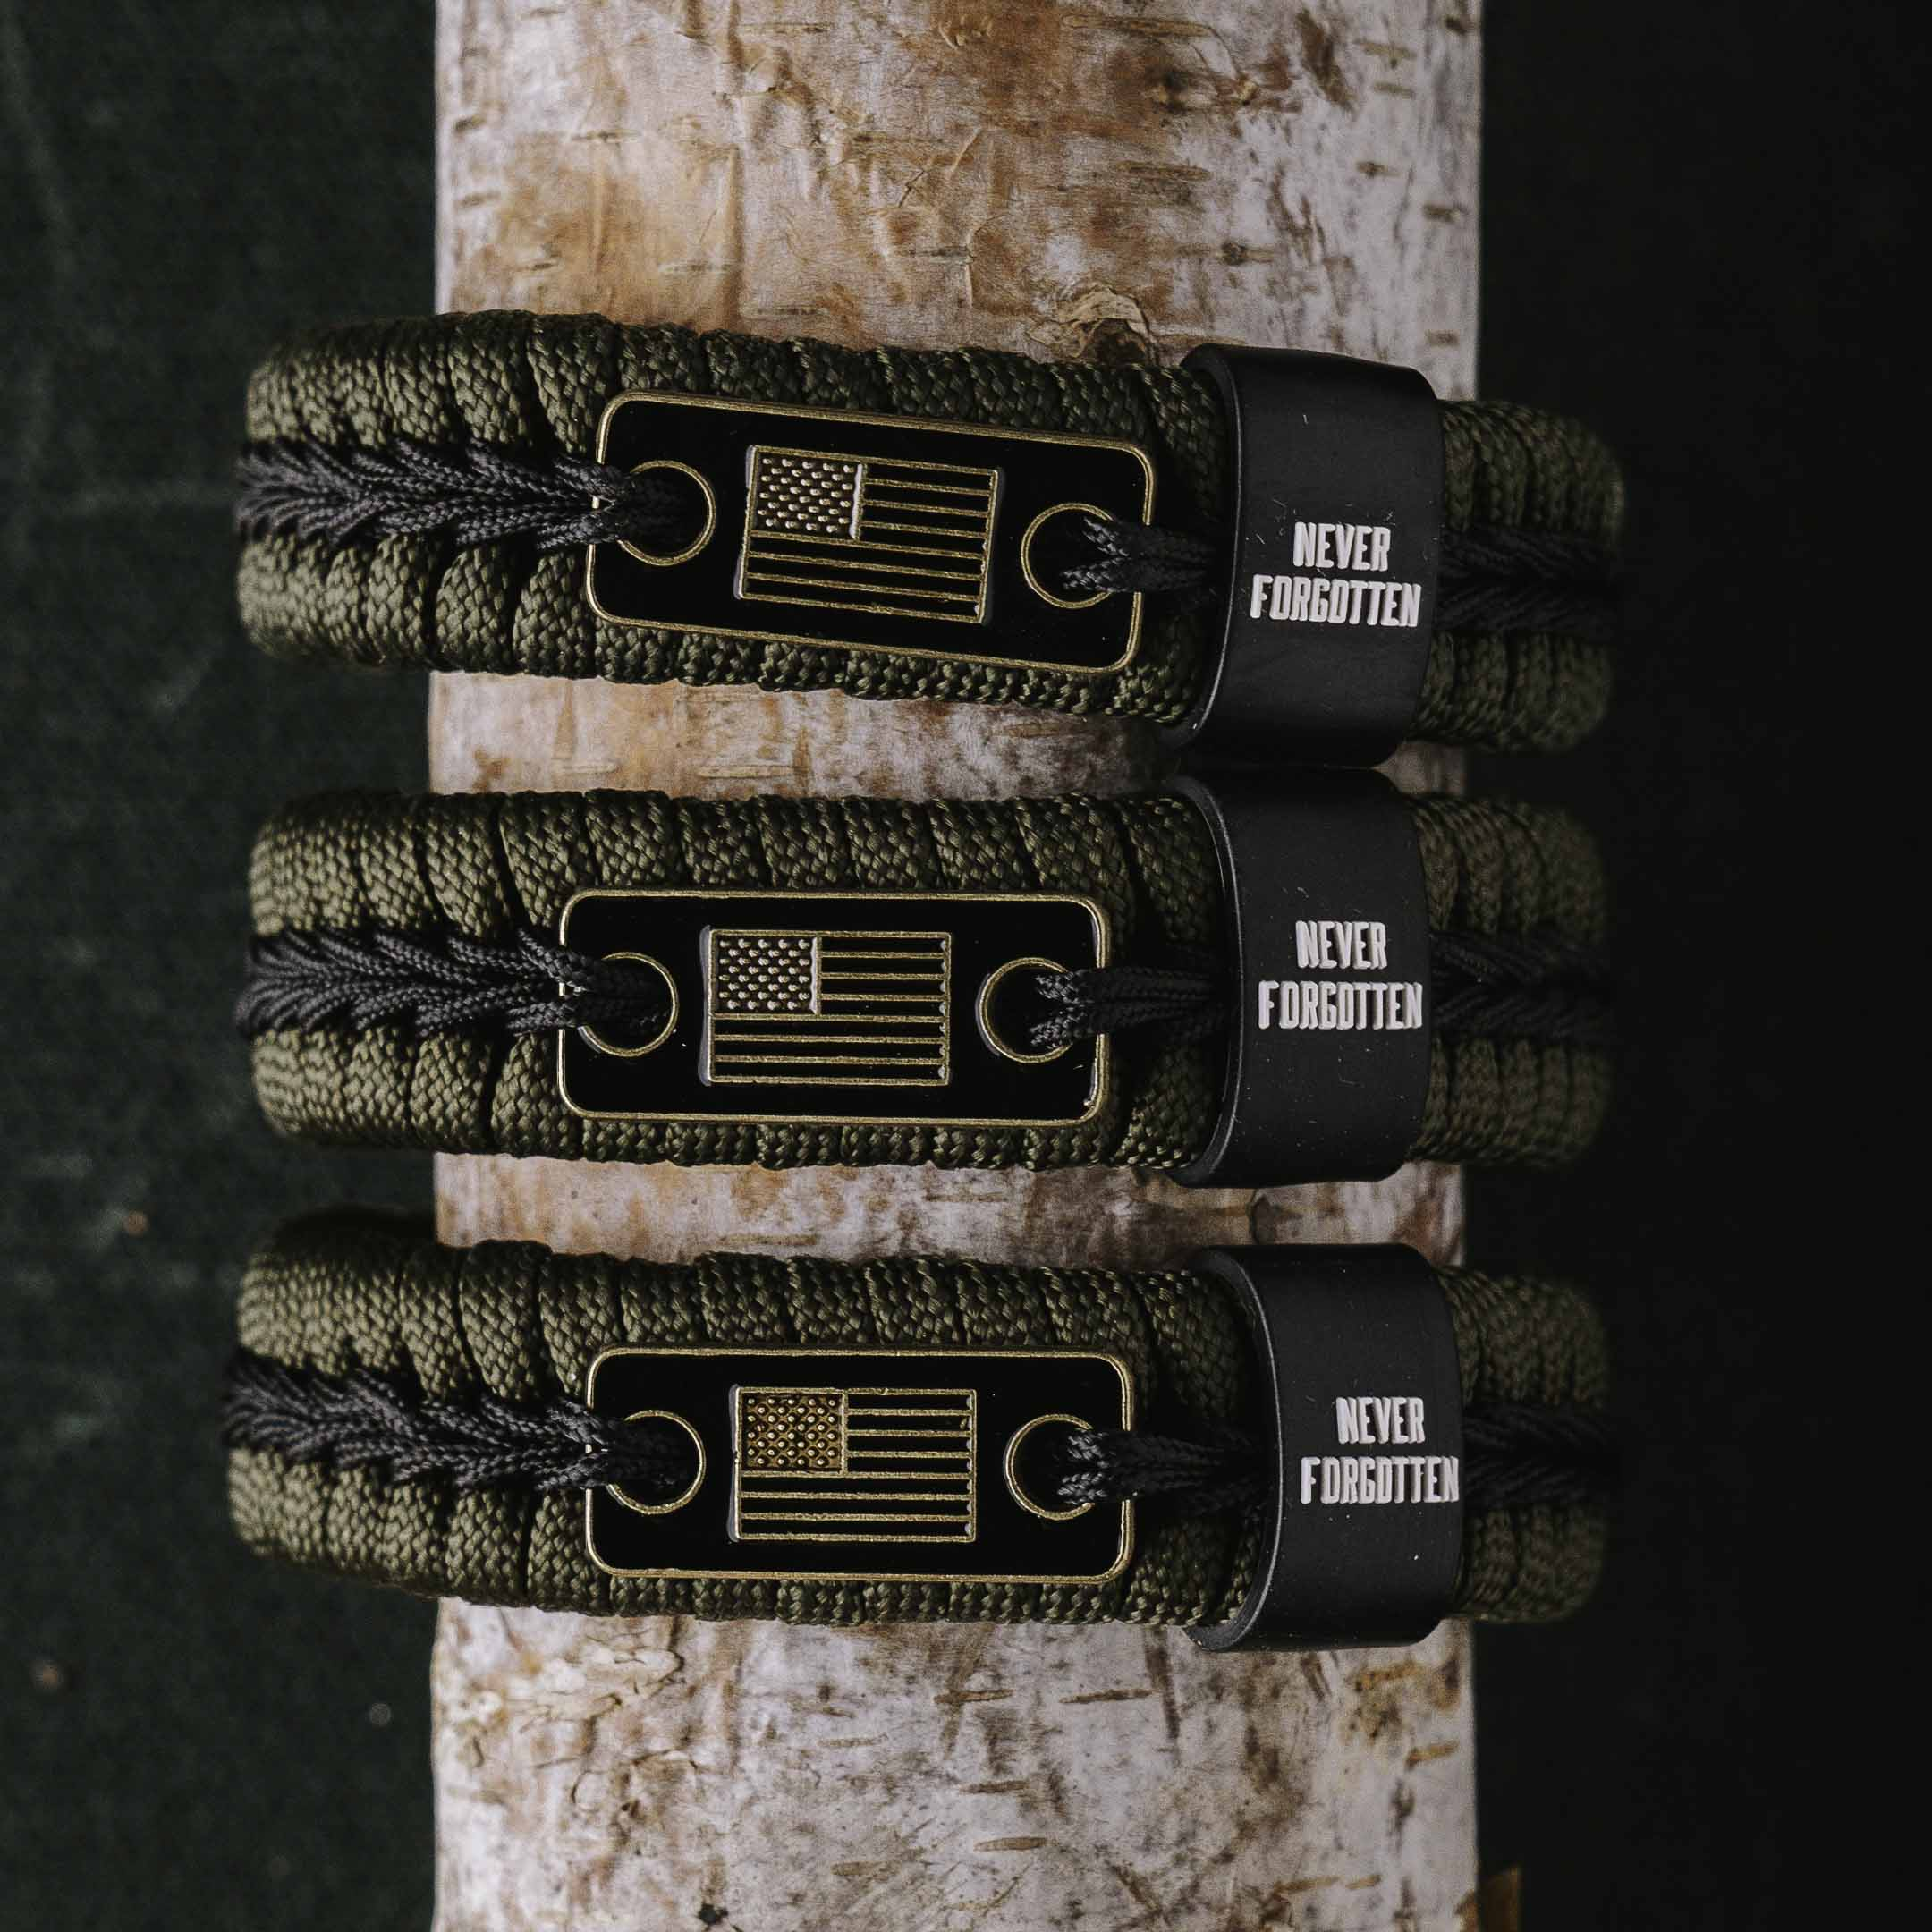 Band Of Brothers Never Surrender Green Paracord Bracelets - Set of